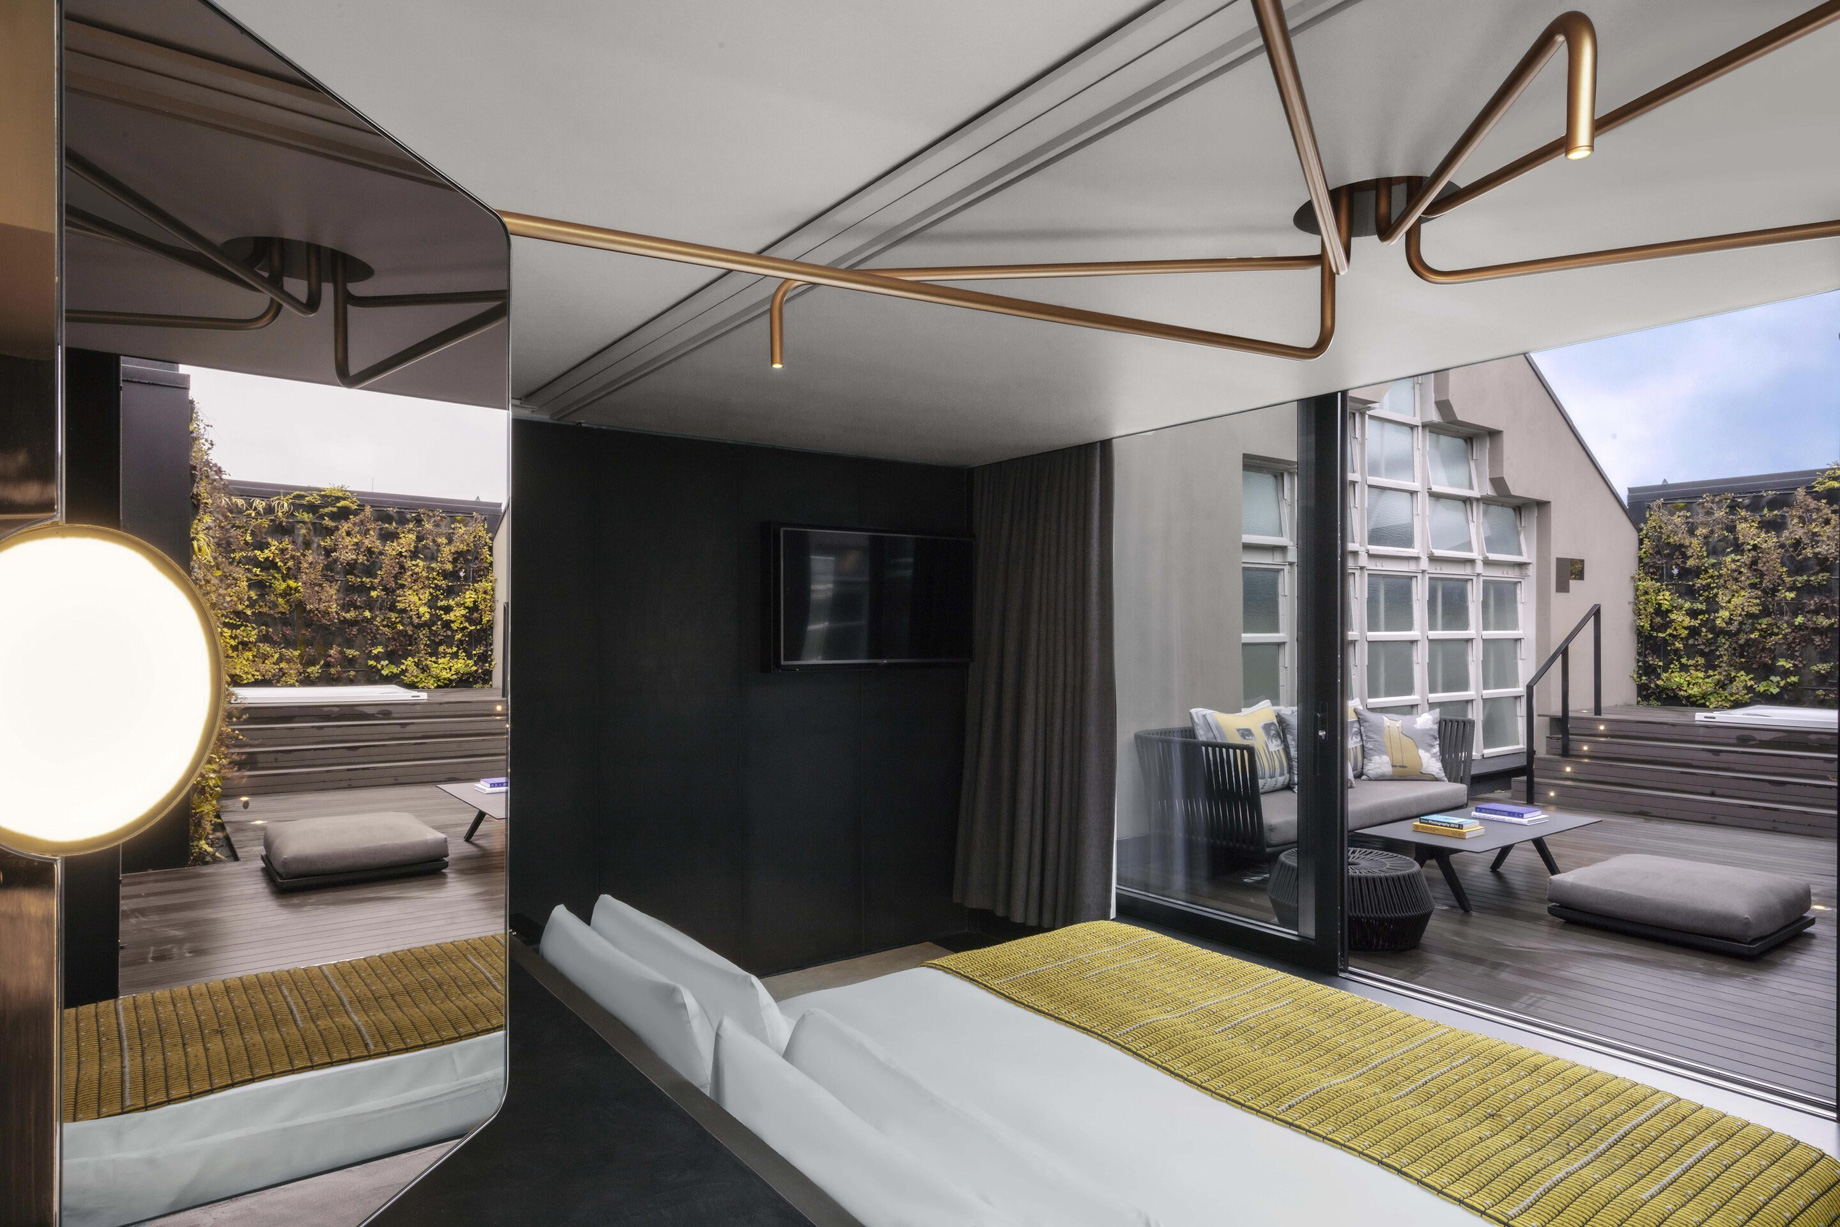 W Amsterdam Hotel – Amsterdam, Netherlands – Fantastic Bank One Bedroom Suite Deck